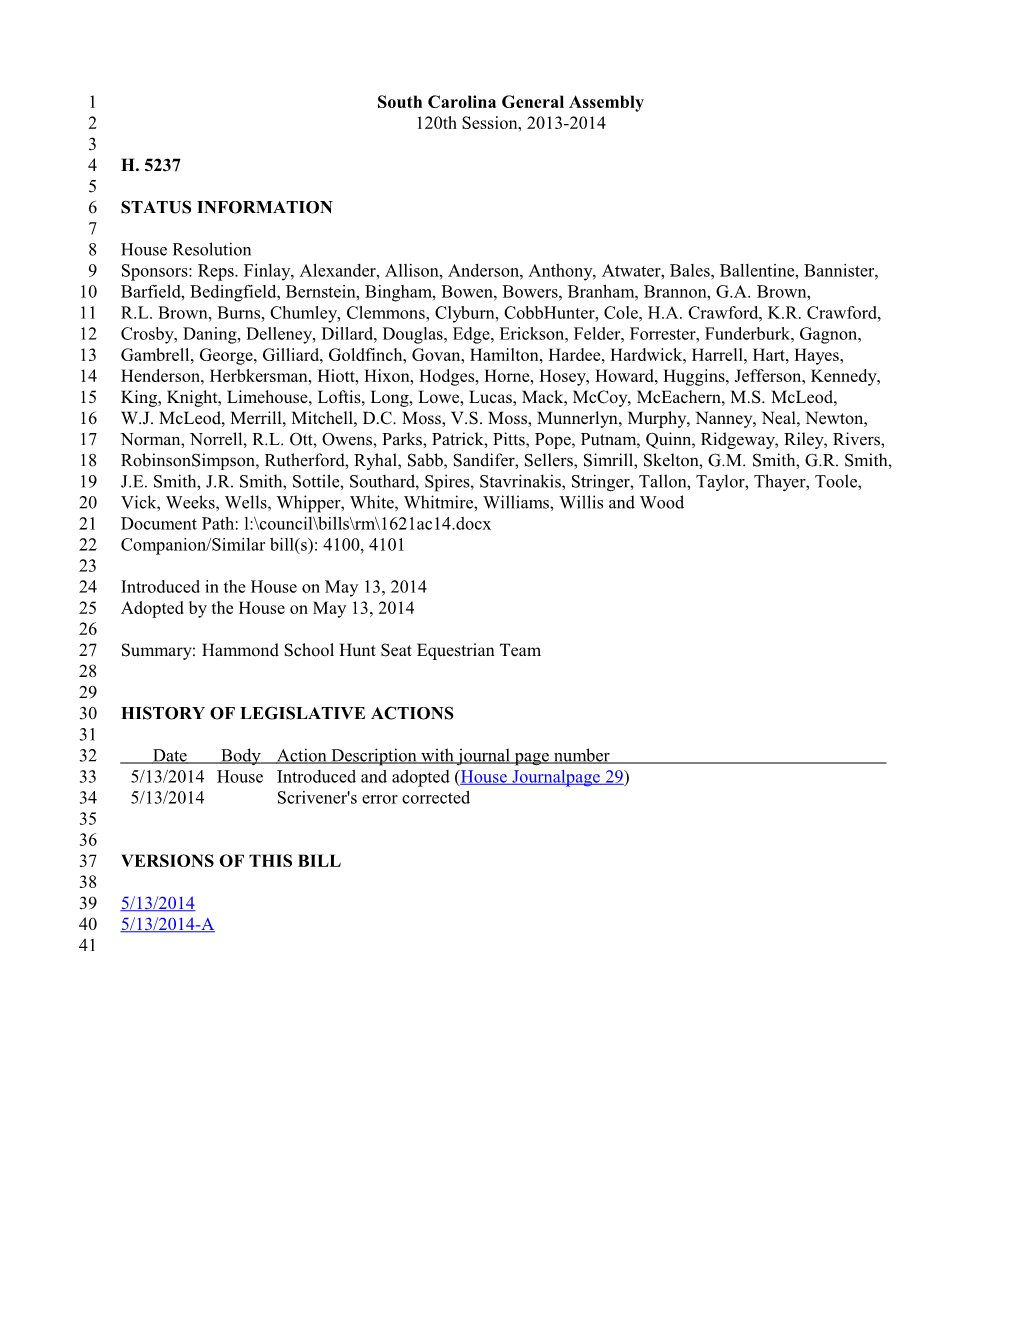 2013-2014 Bill 5237: Hammond School Hunt Seat Equestrian Team - South Carolina Legislature